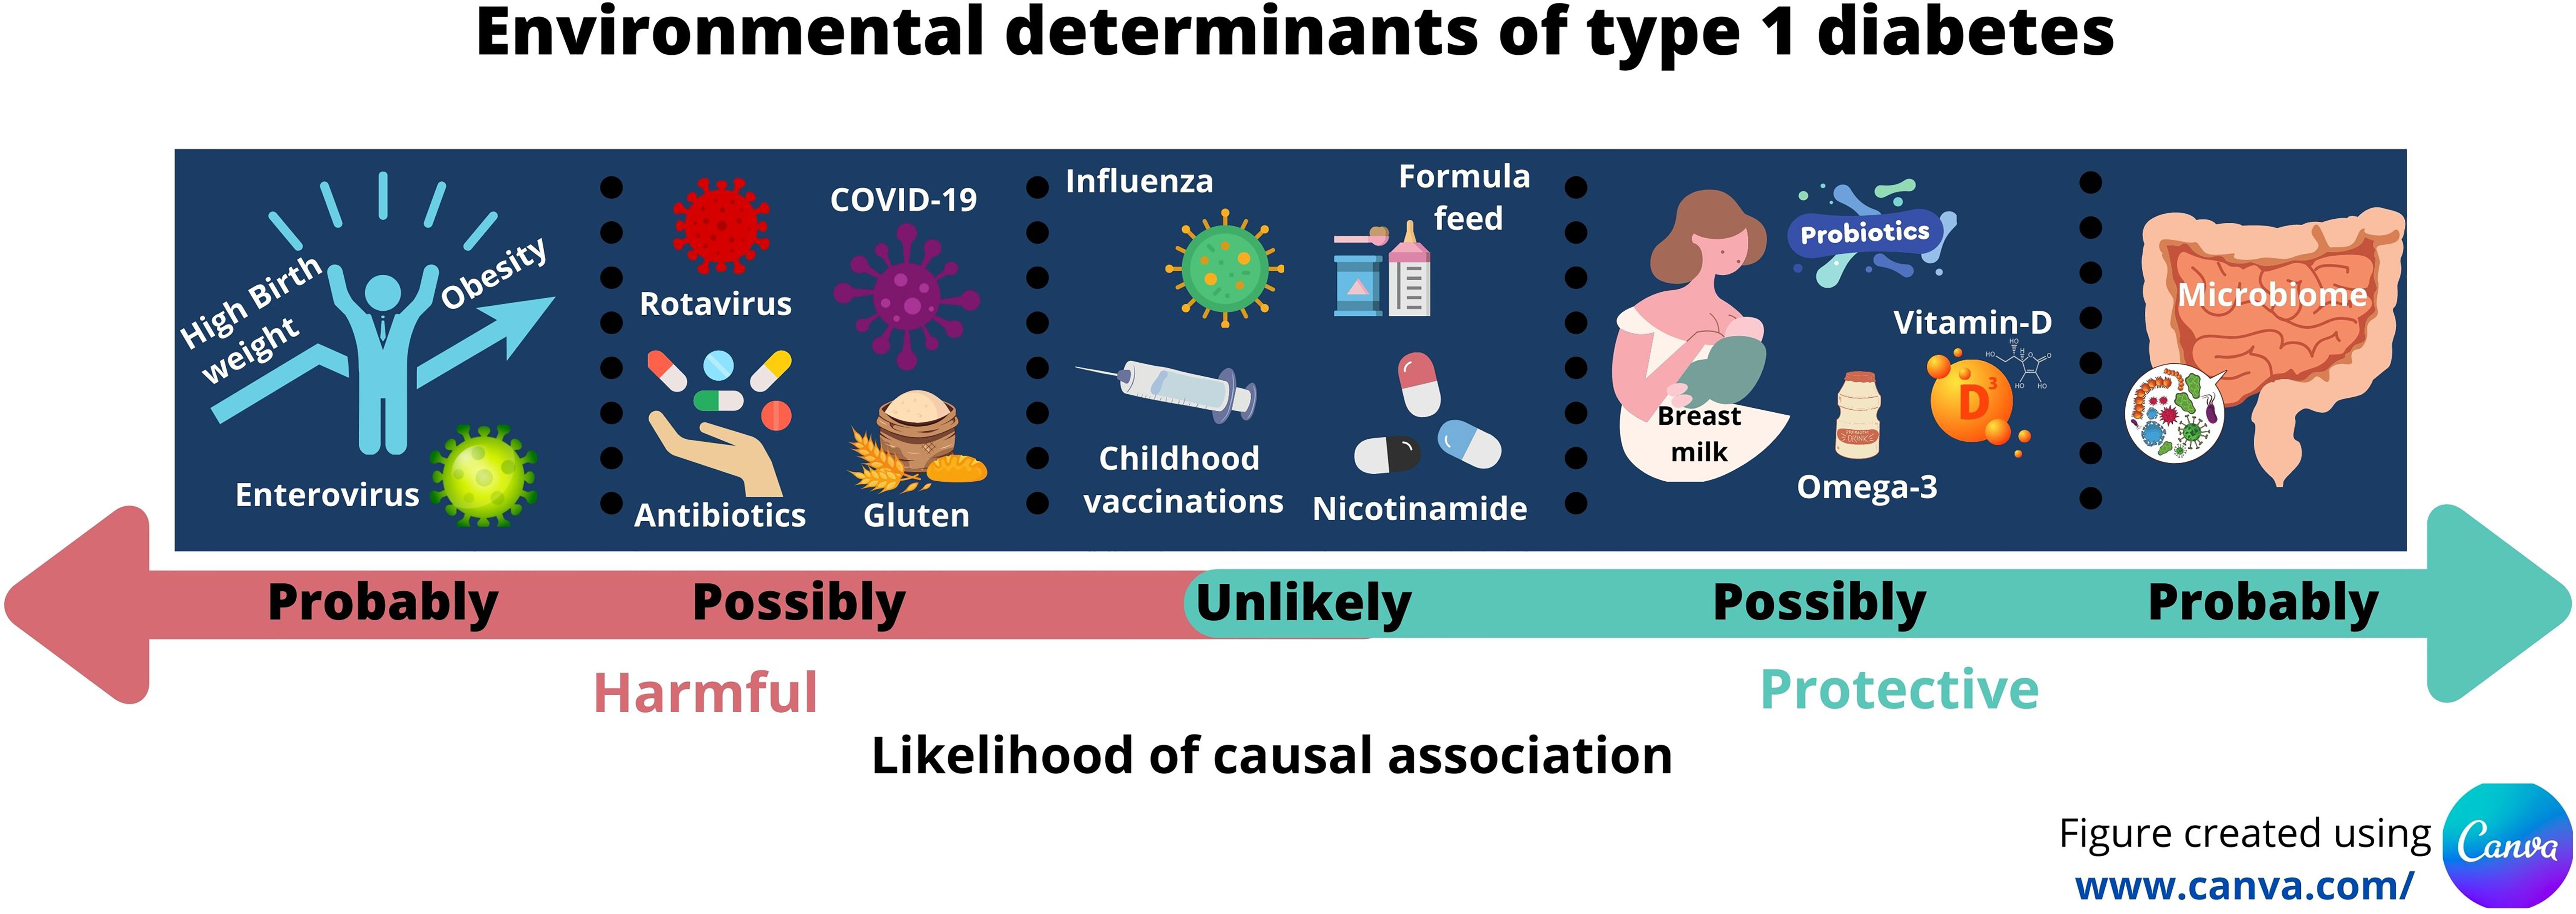 hygiene hypothesis type 1 diabetes